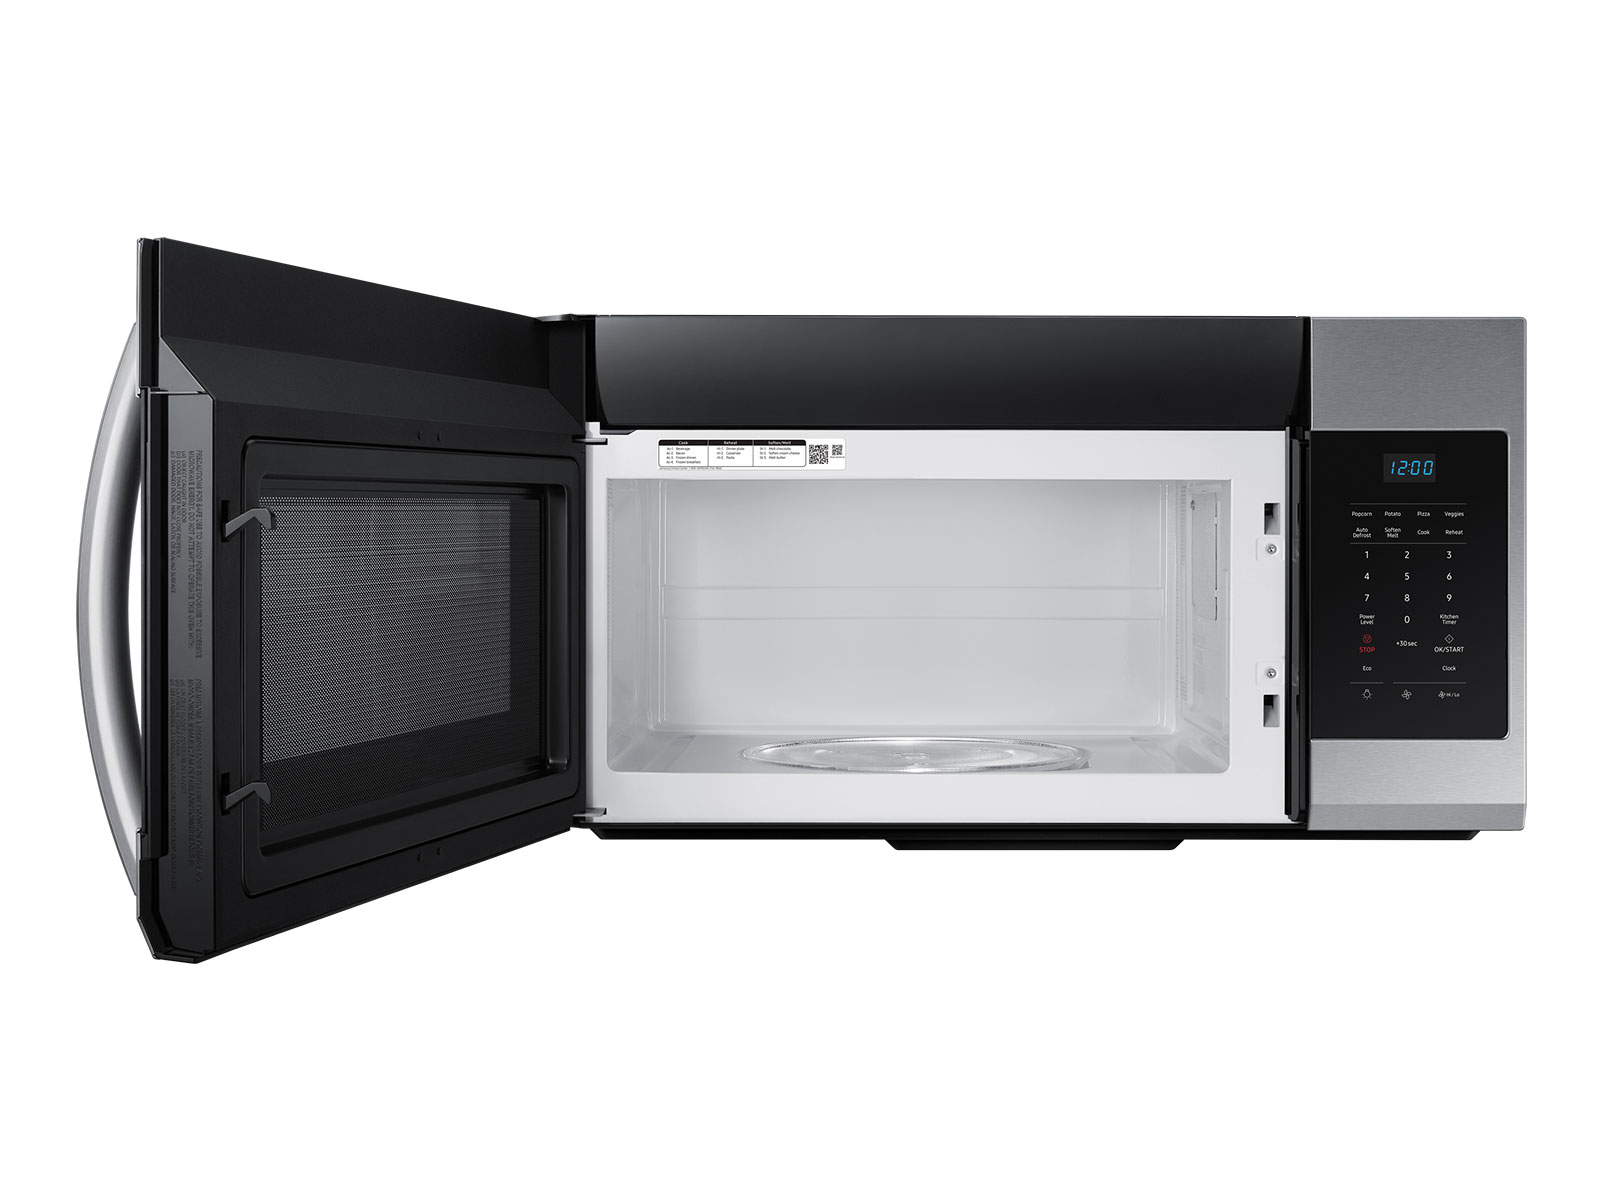 Mini Microwave - appliances - by owner - sale - craigslist